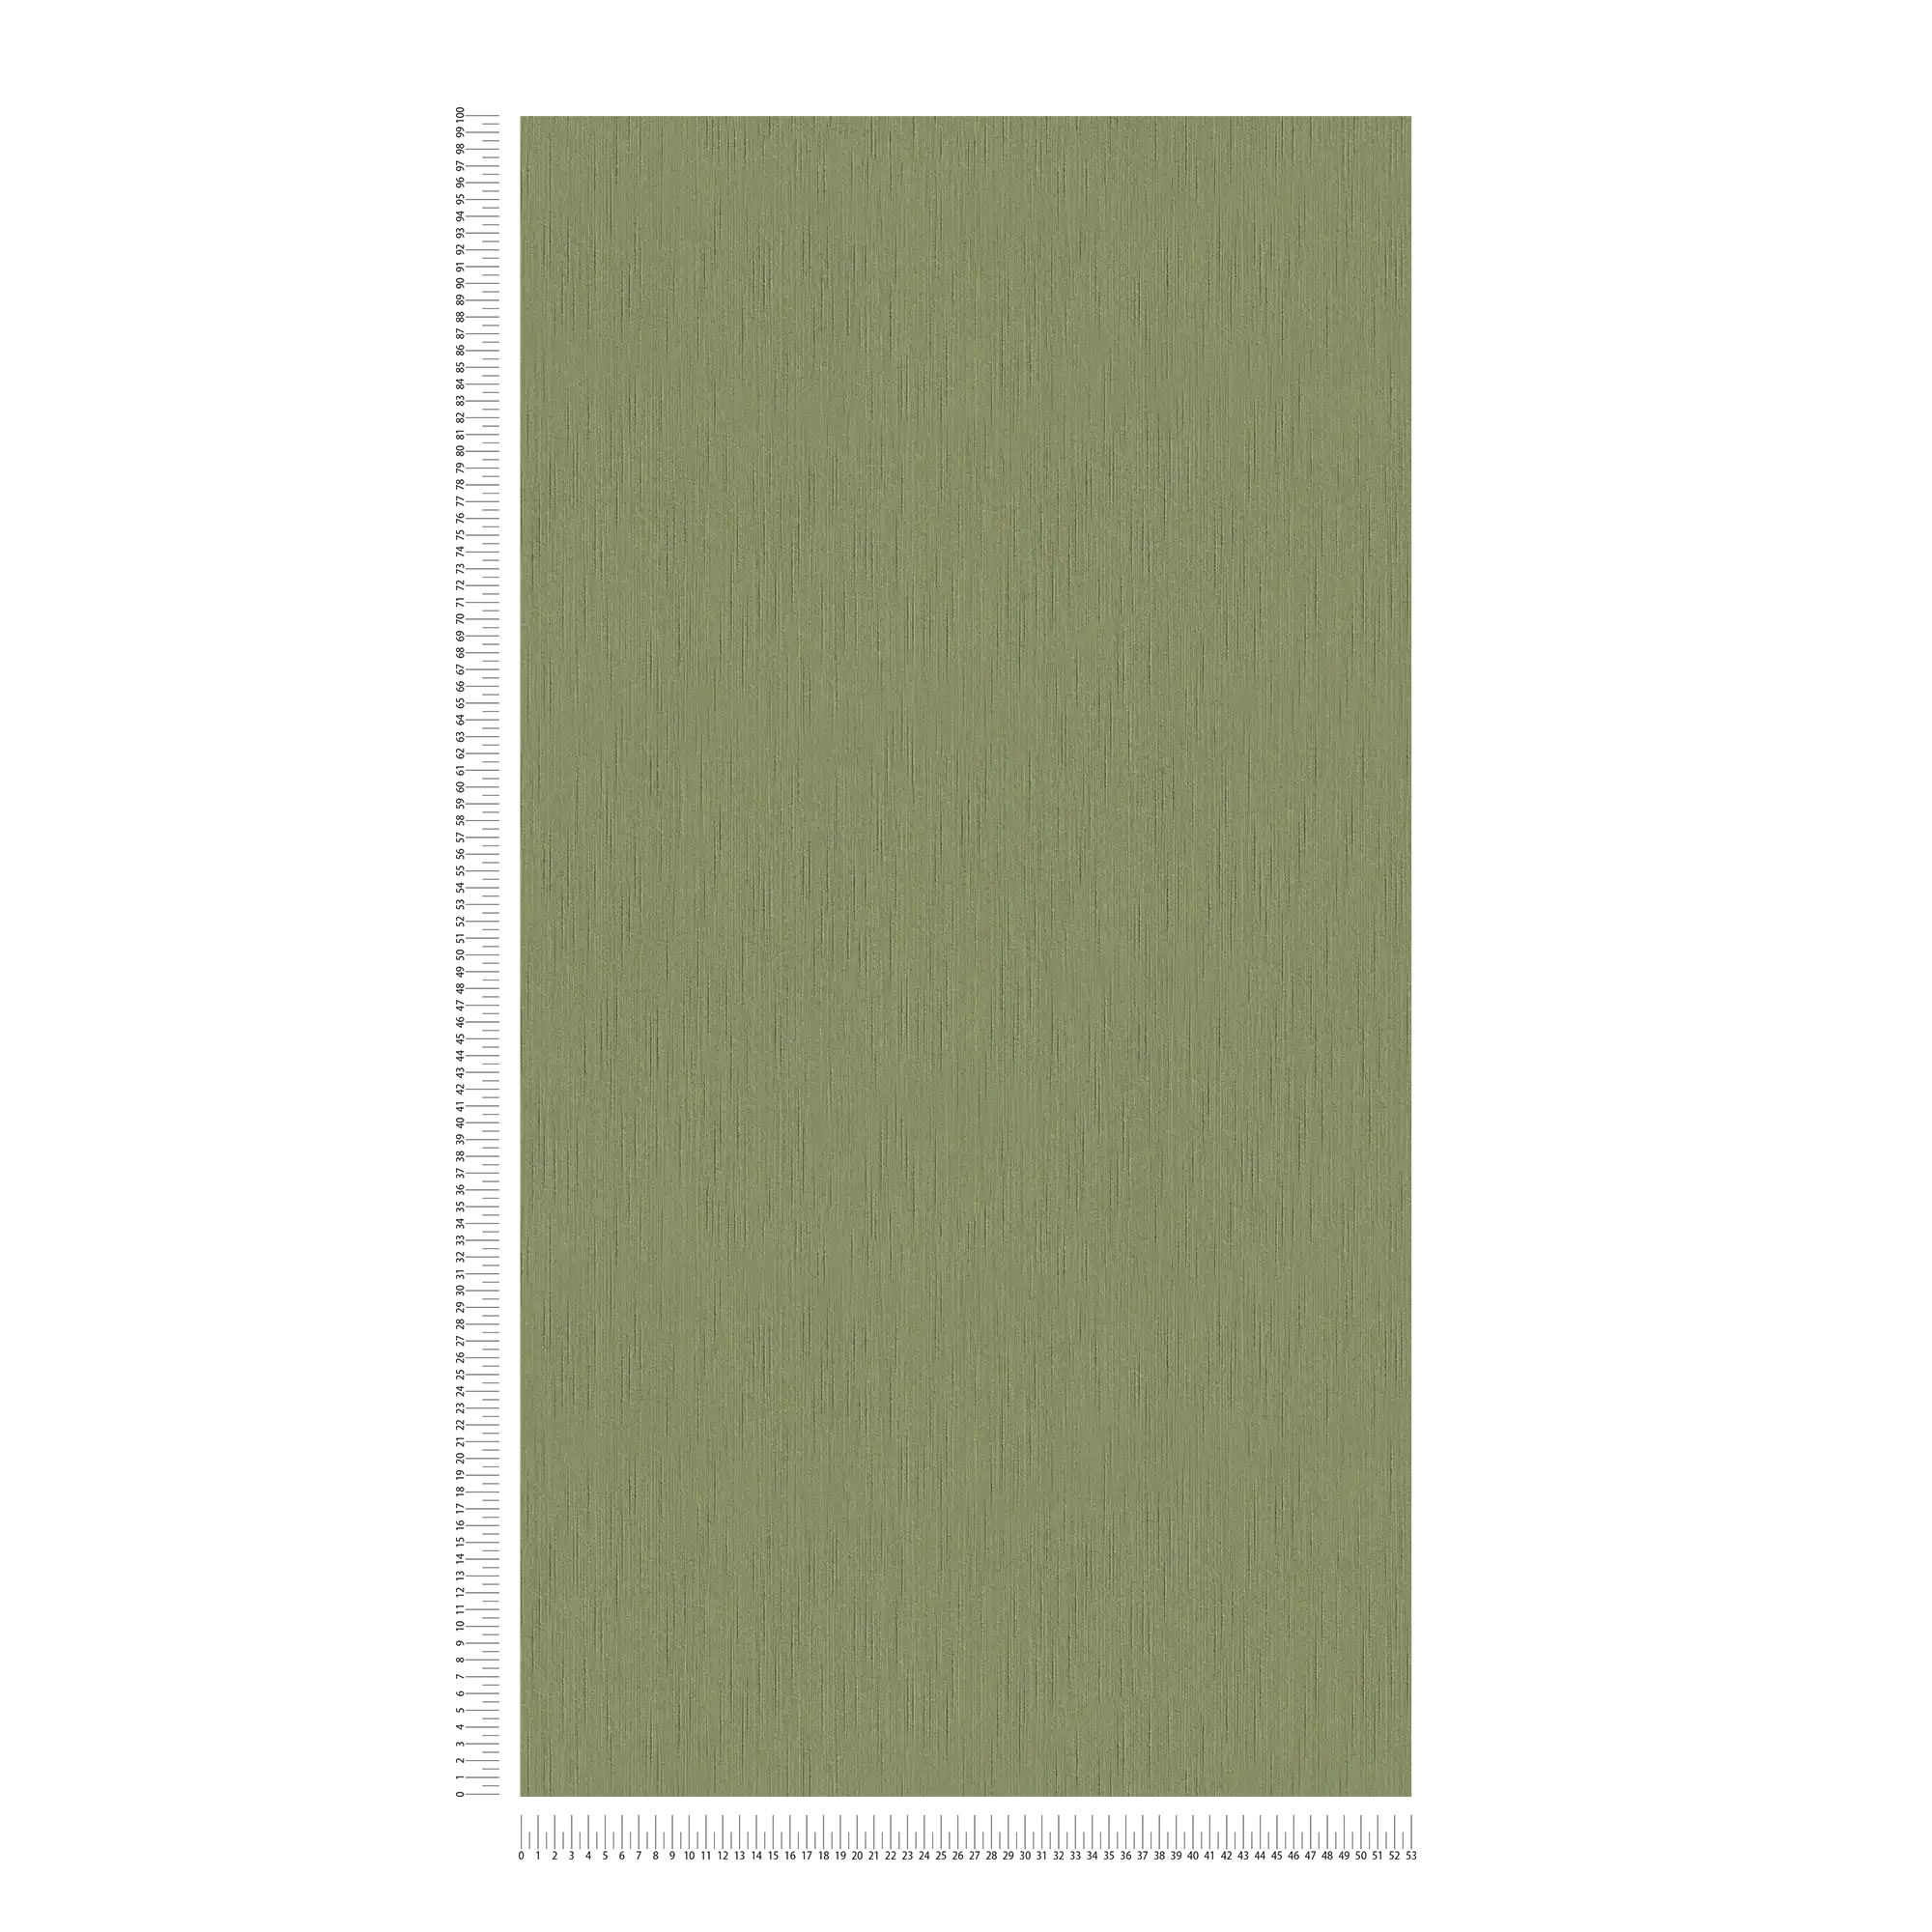             Dark green non-woven wallpaper with mottled texture - green
        